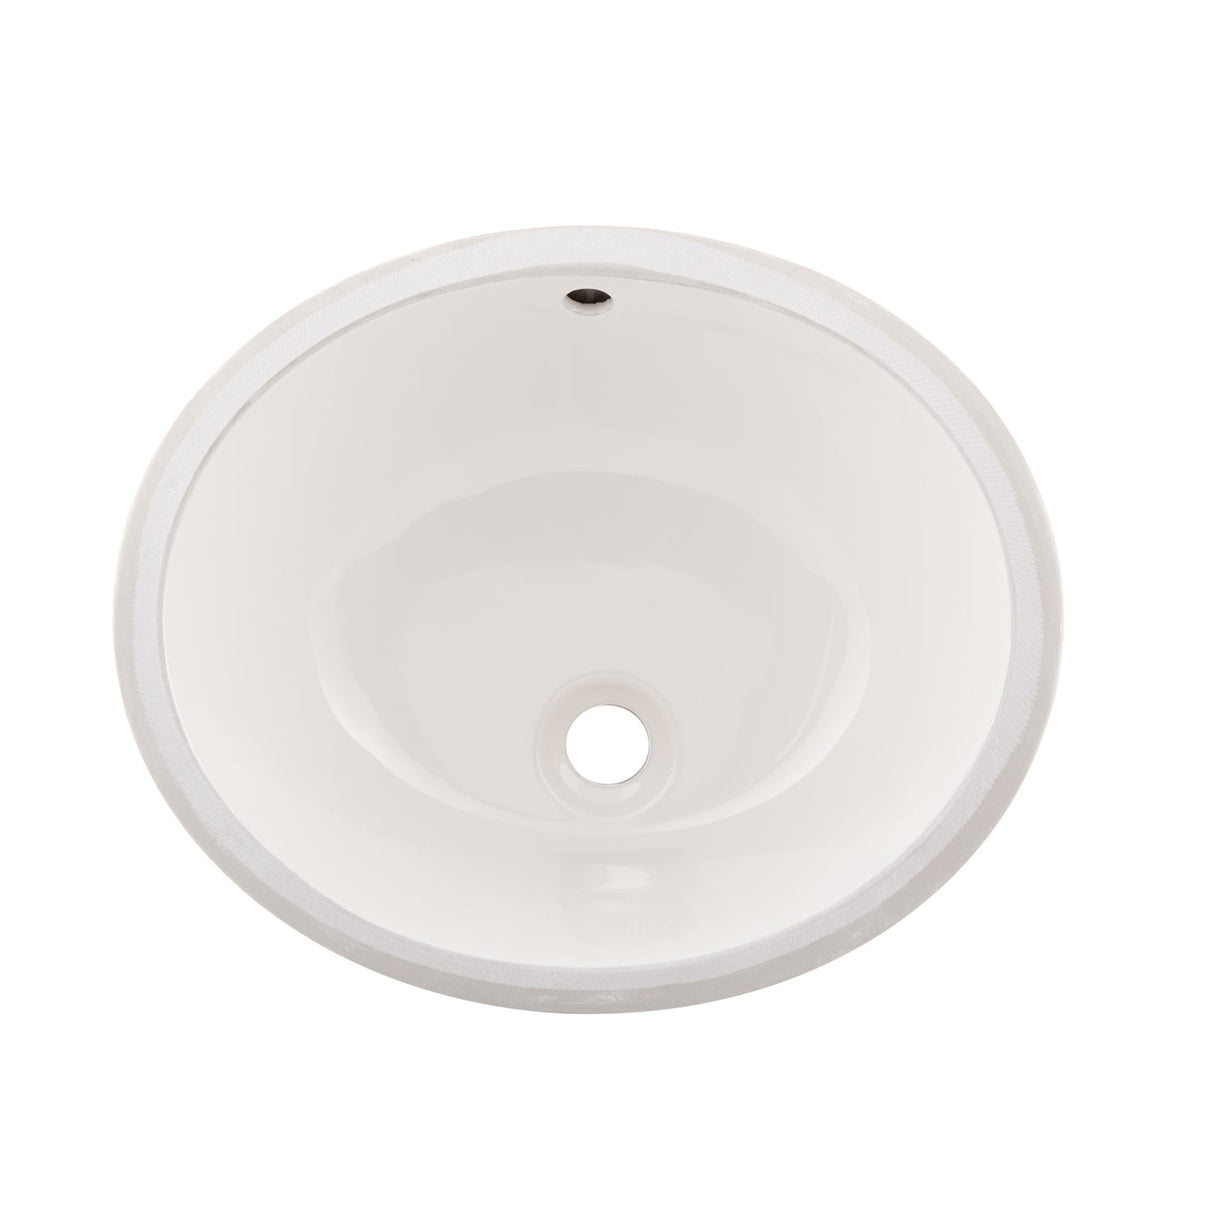 DAX Ceramic Oval Single Bowl Undermount Bathroom Basin, Ivory BSN-101